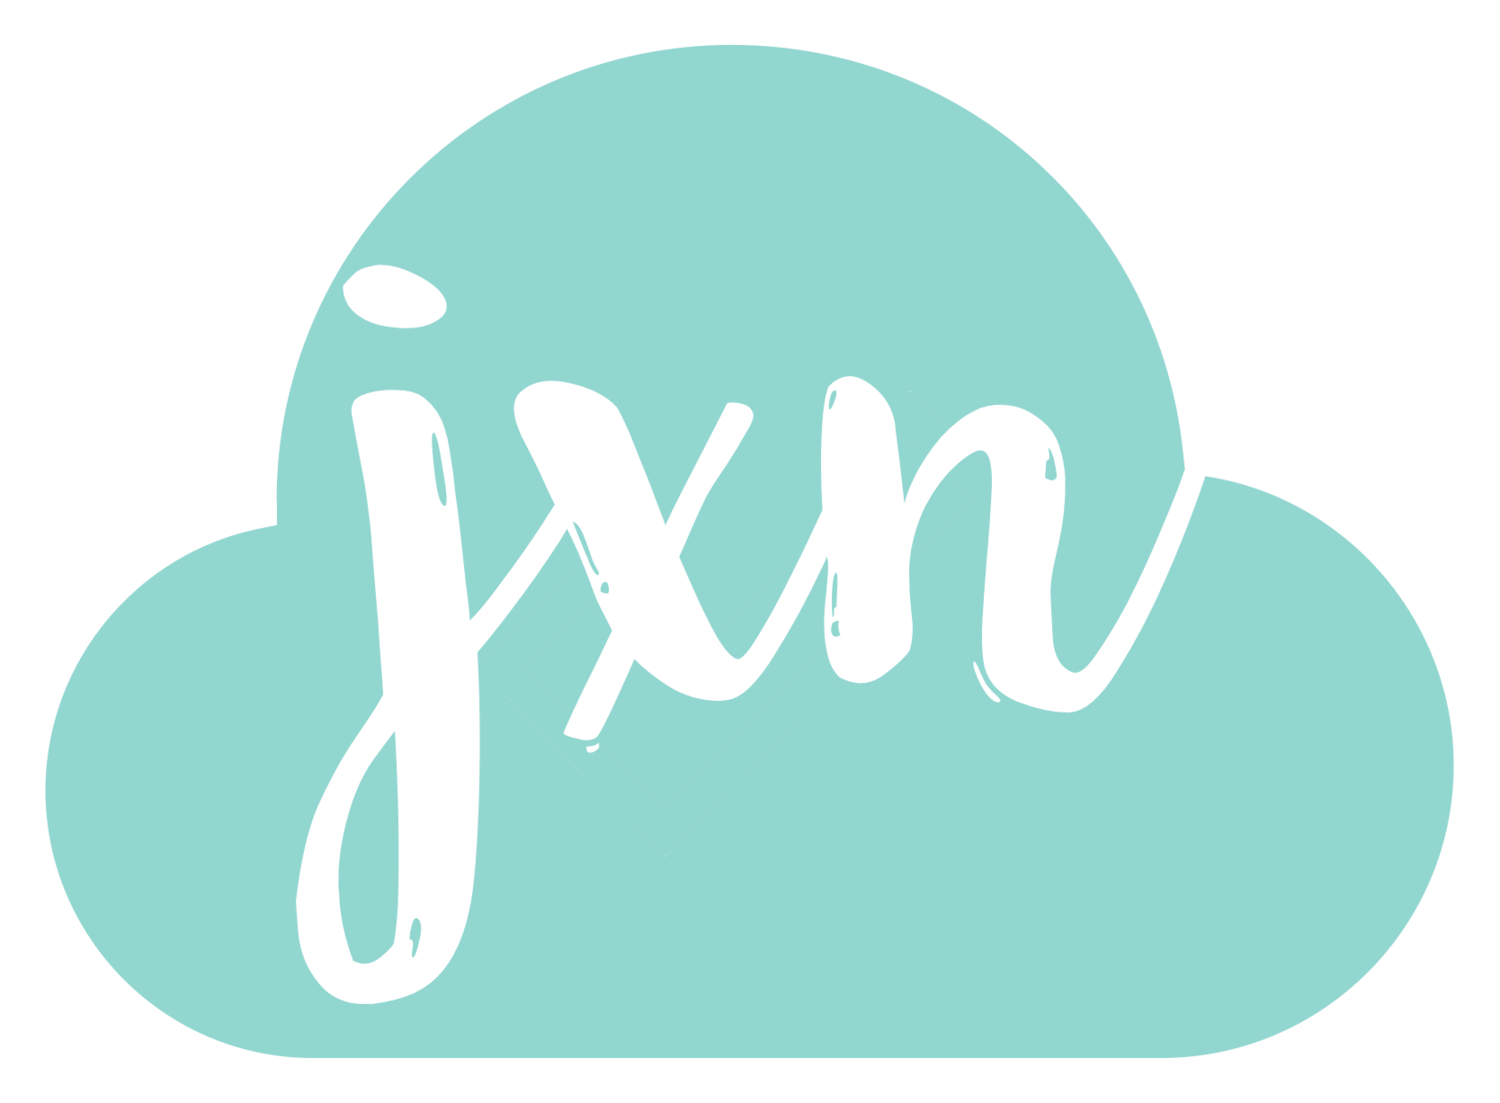 JXN Cloud